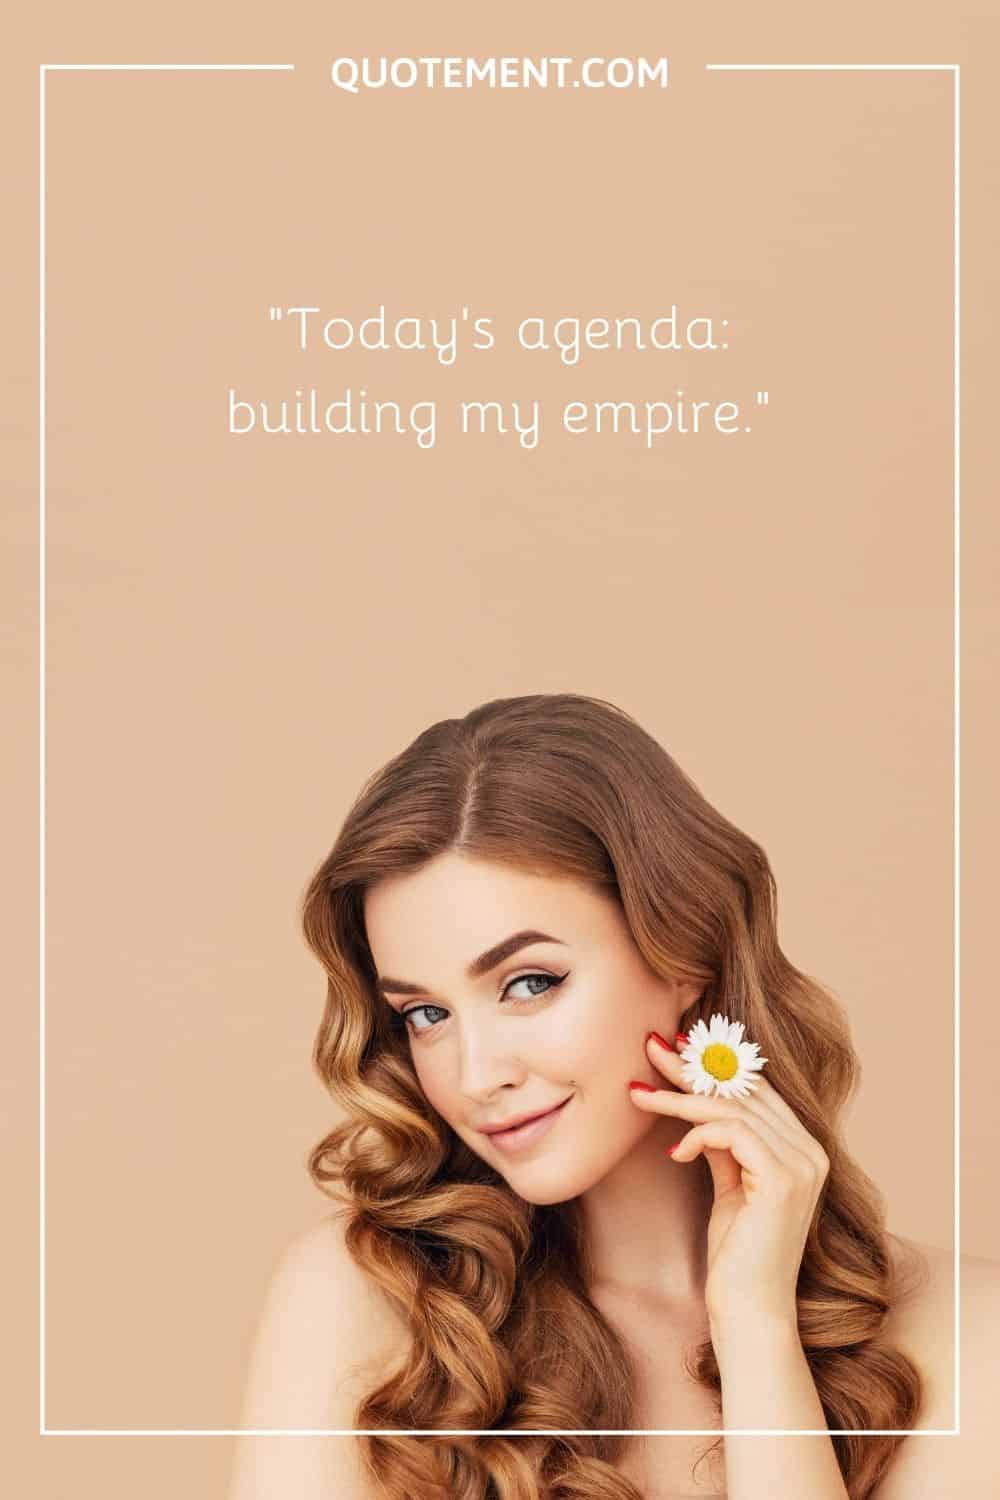 Today's agenda building my empire.